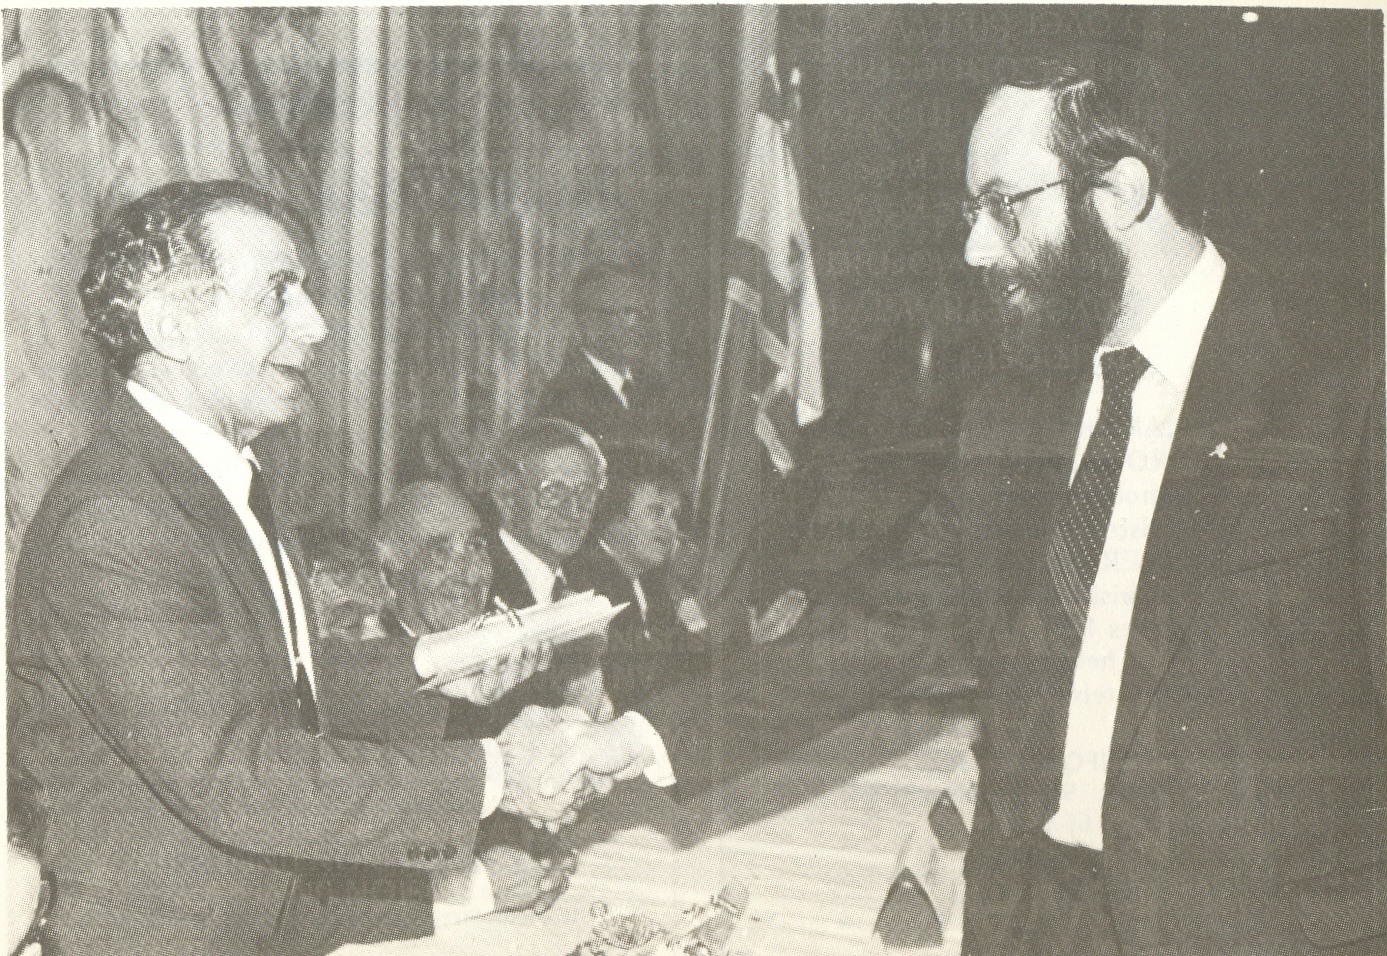 Shlomo Hillel presents Dr. David Applebaum with the knesset's quality of life award ca. 1988